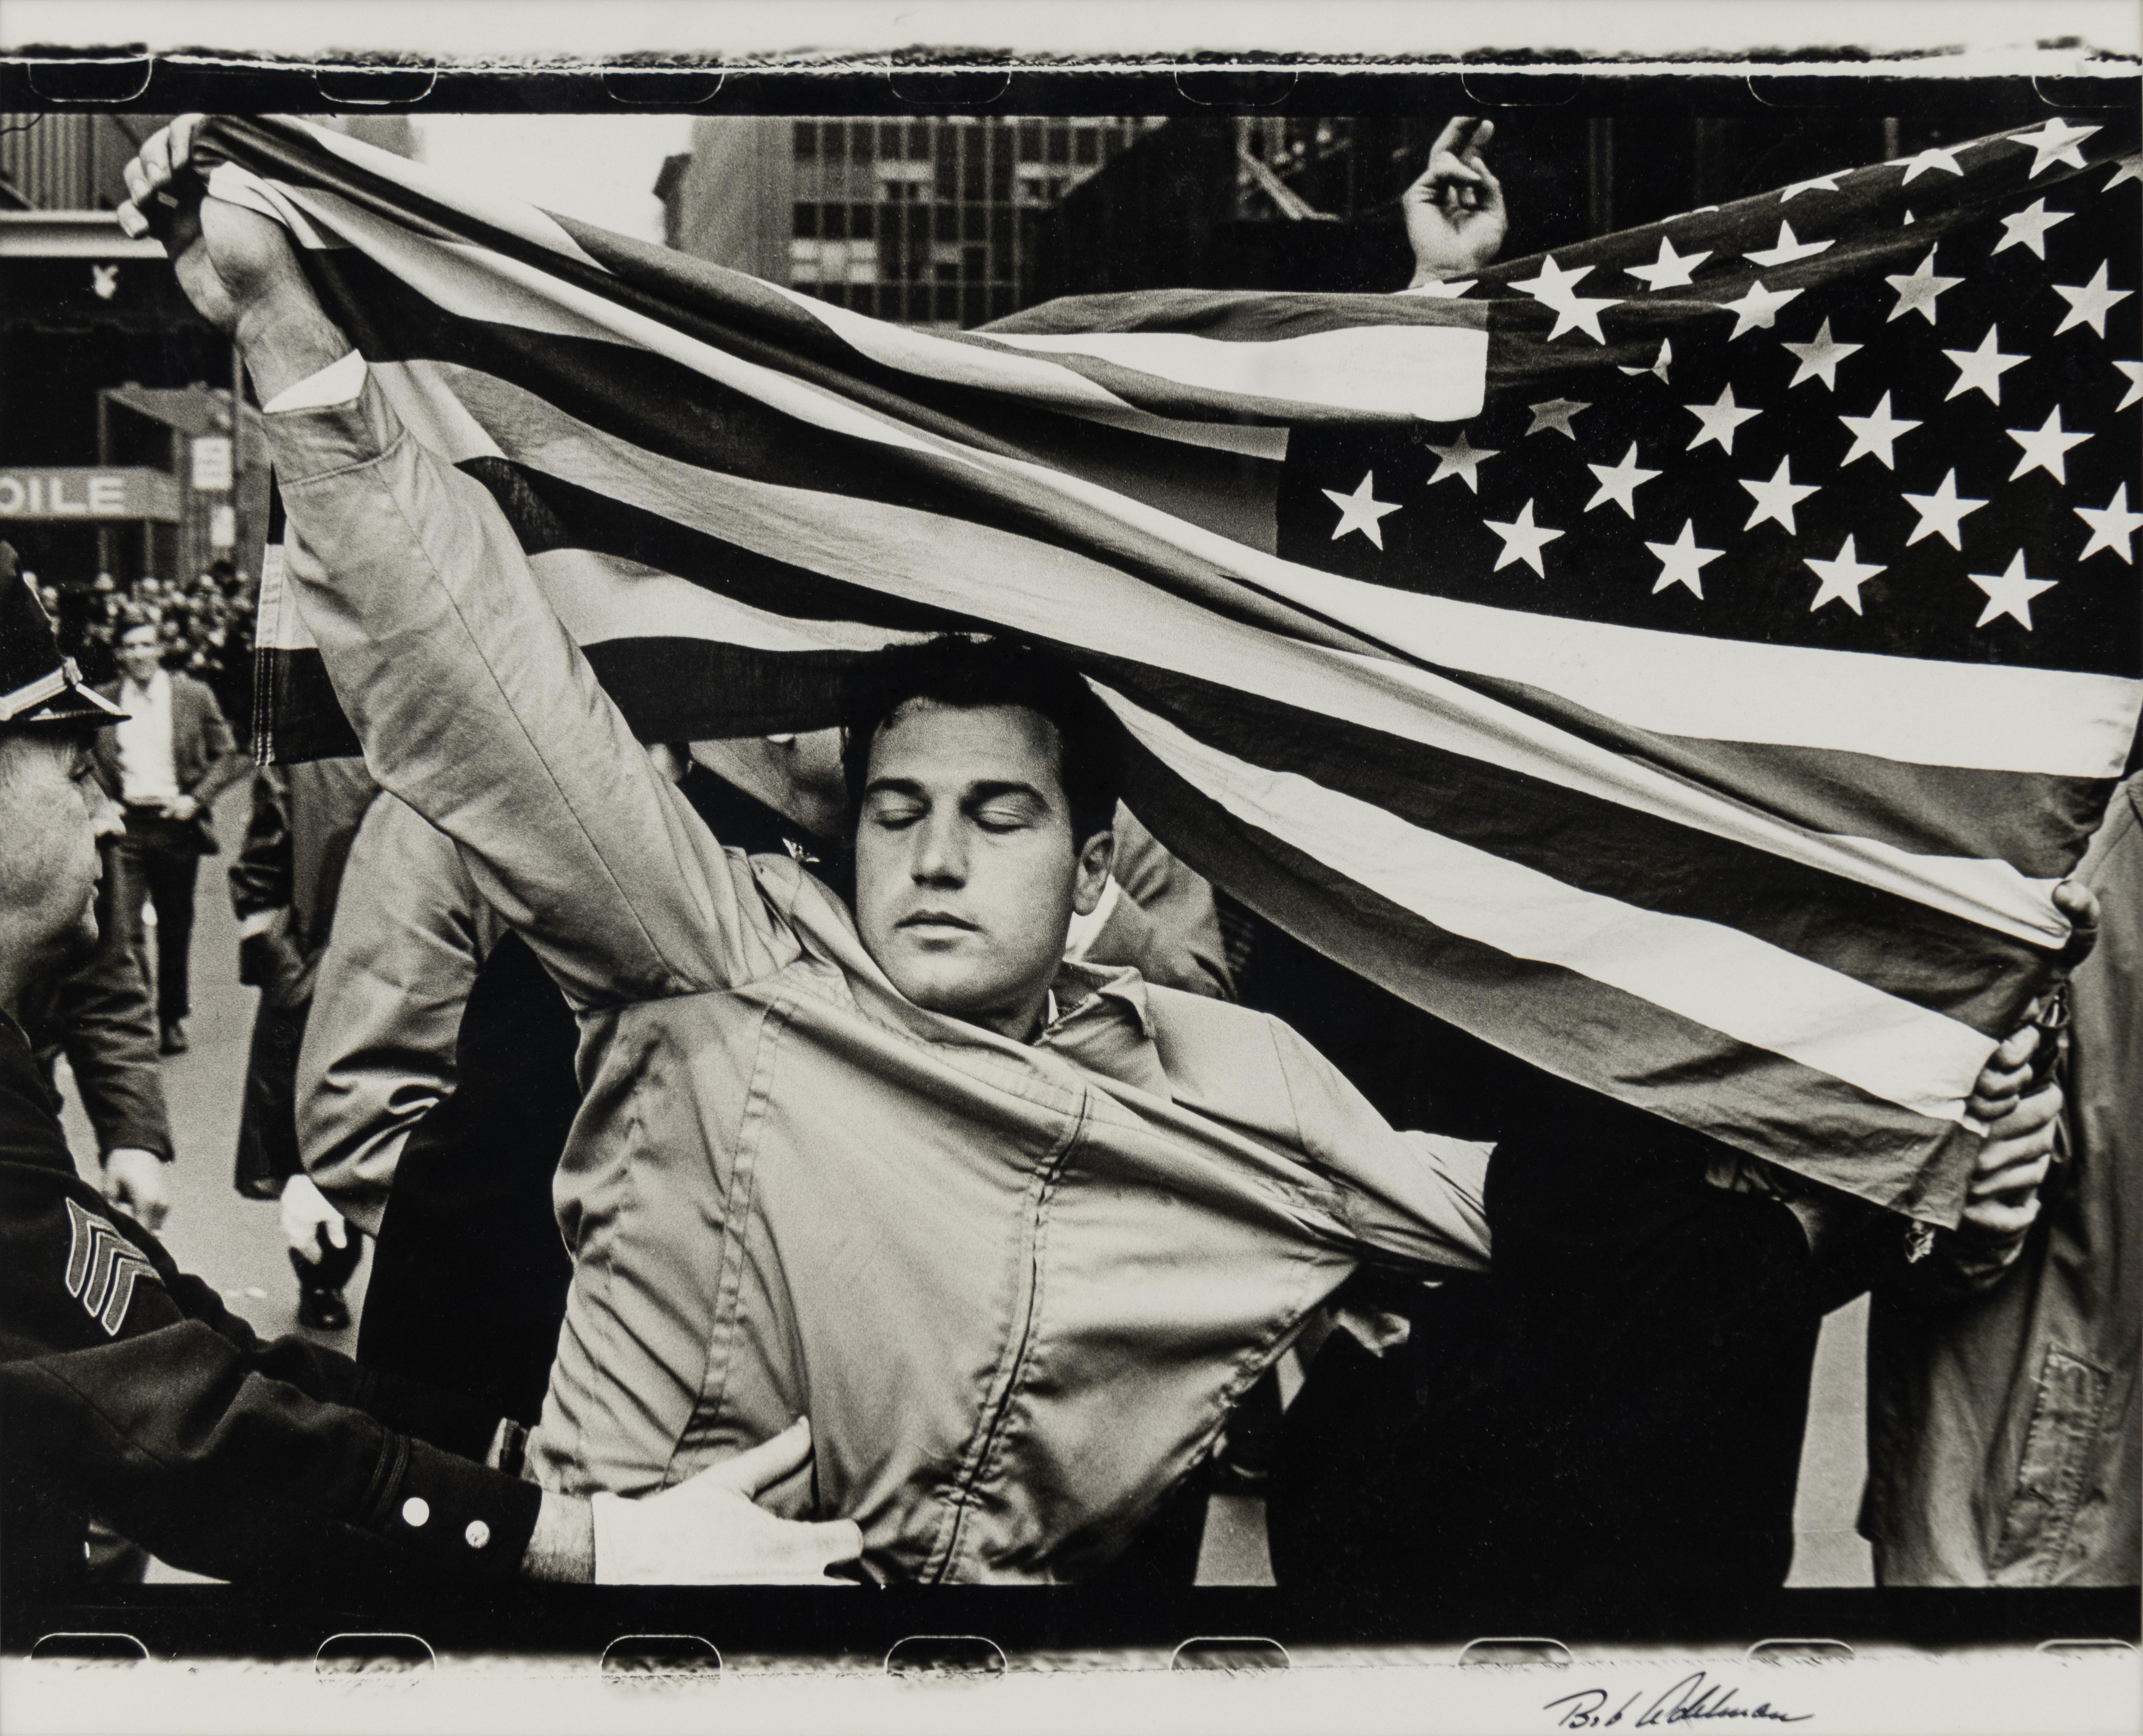 Pro-Vietnam War Demonstrator at Anti-war Demonstration in New York City. - Photograph by Bob Adelman